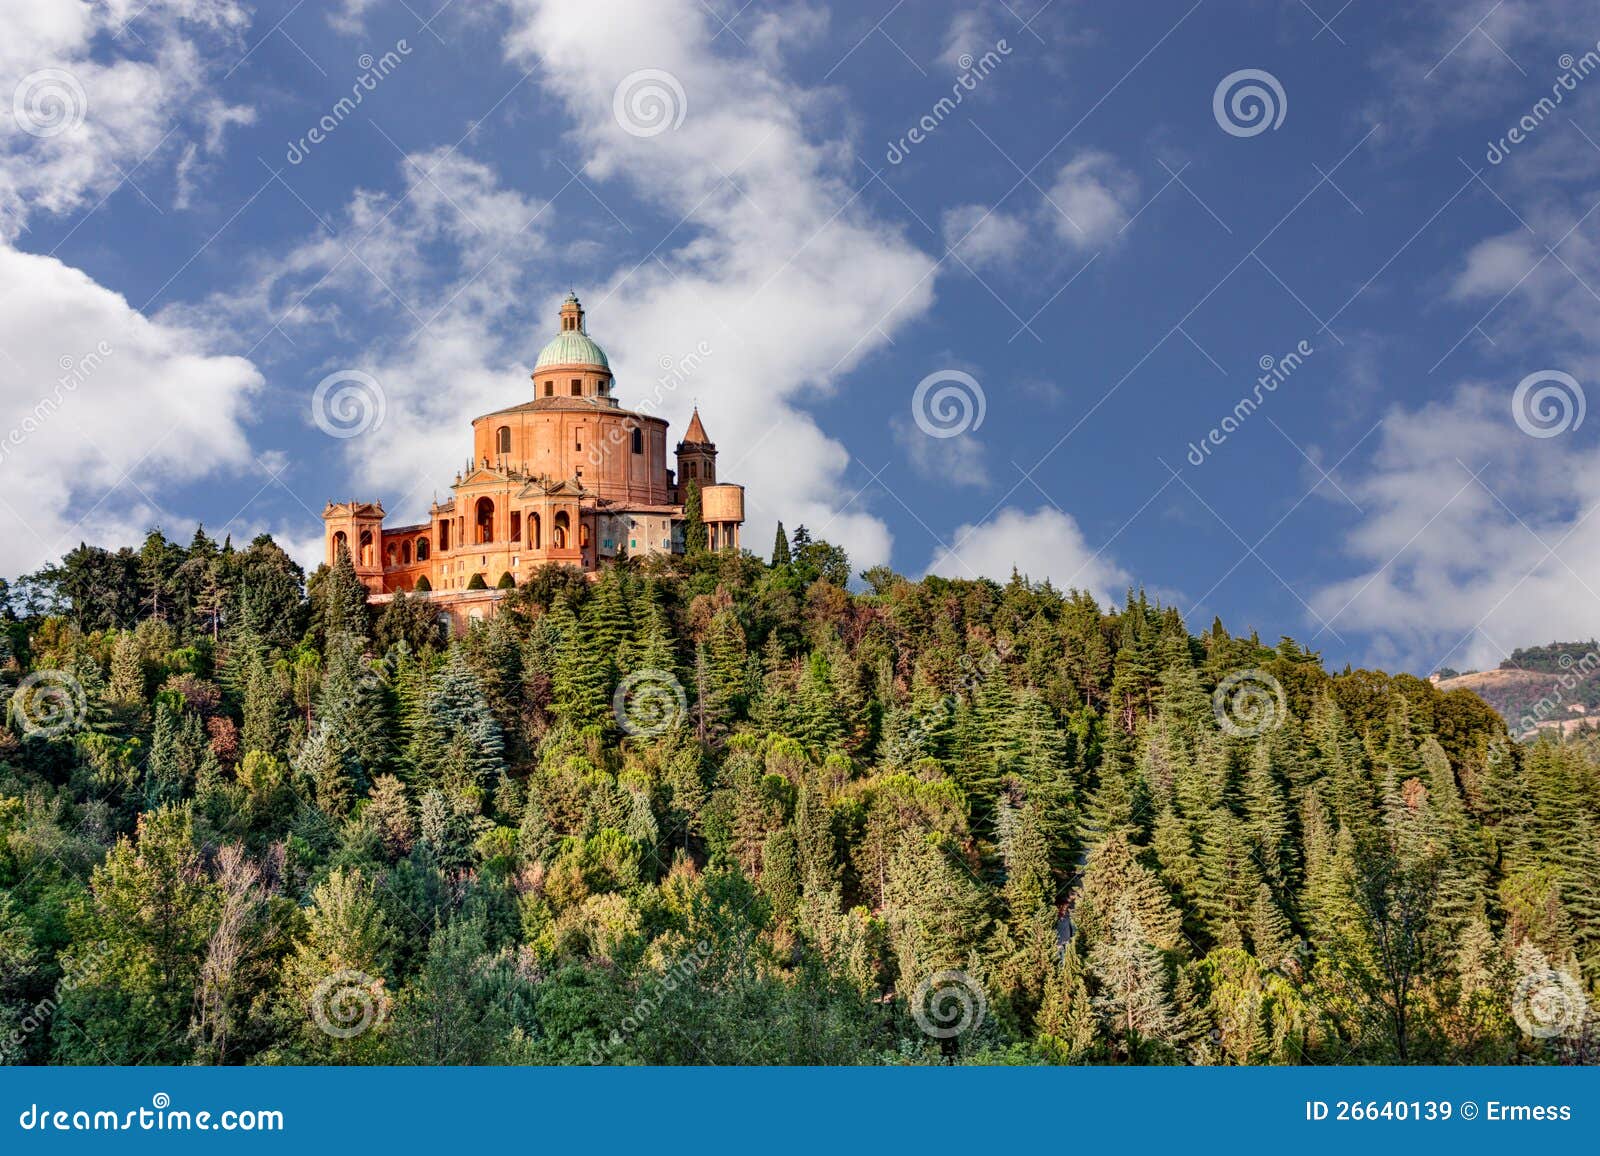 sanctuary of the madonna di san luca, bologna